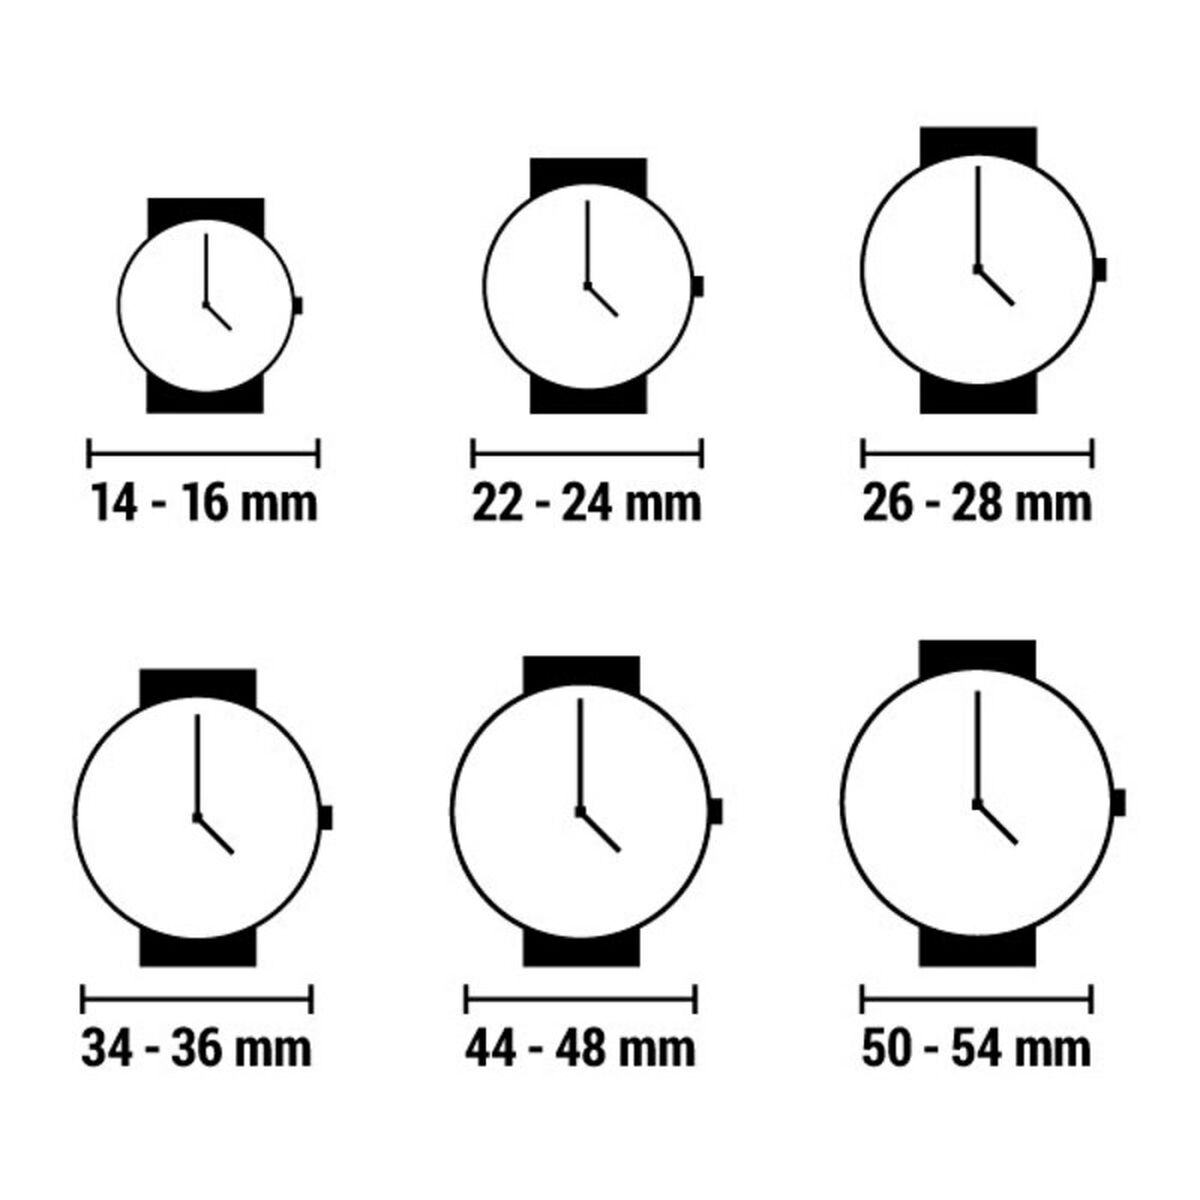 Horloge Dames Snooz SPA1039-83 (Ø 34 mm)